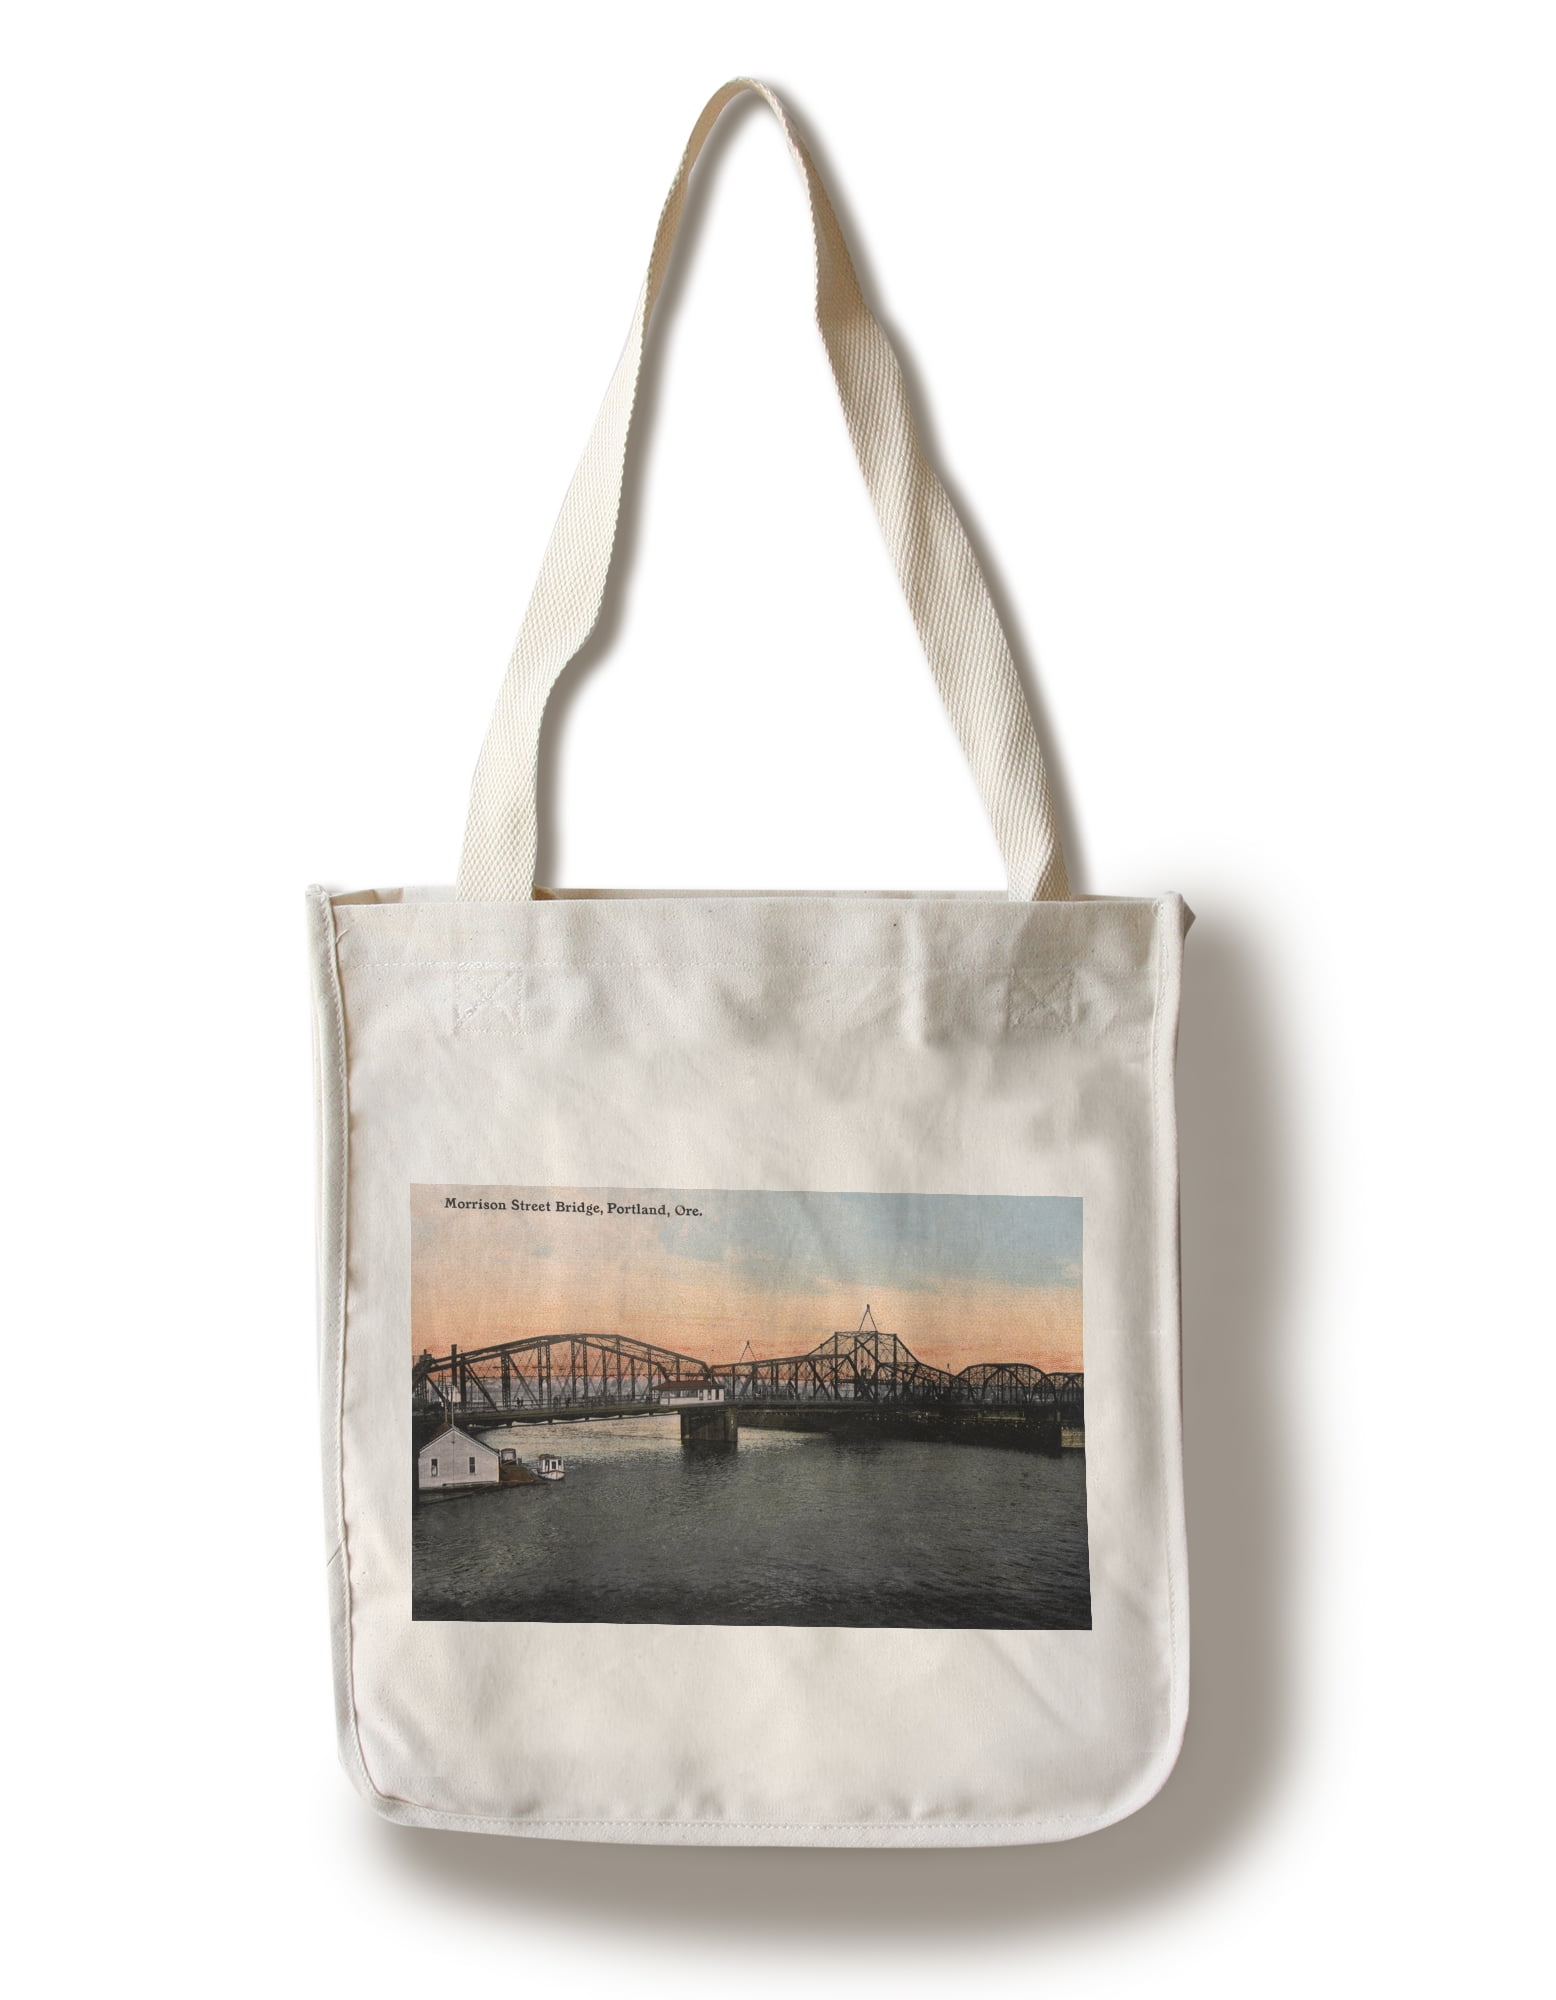 Night Lake Bridge Landscape Tote Bag Purse Handbag For Women Girls